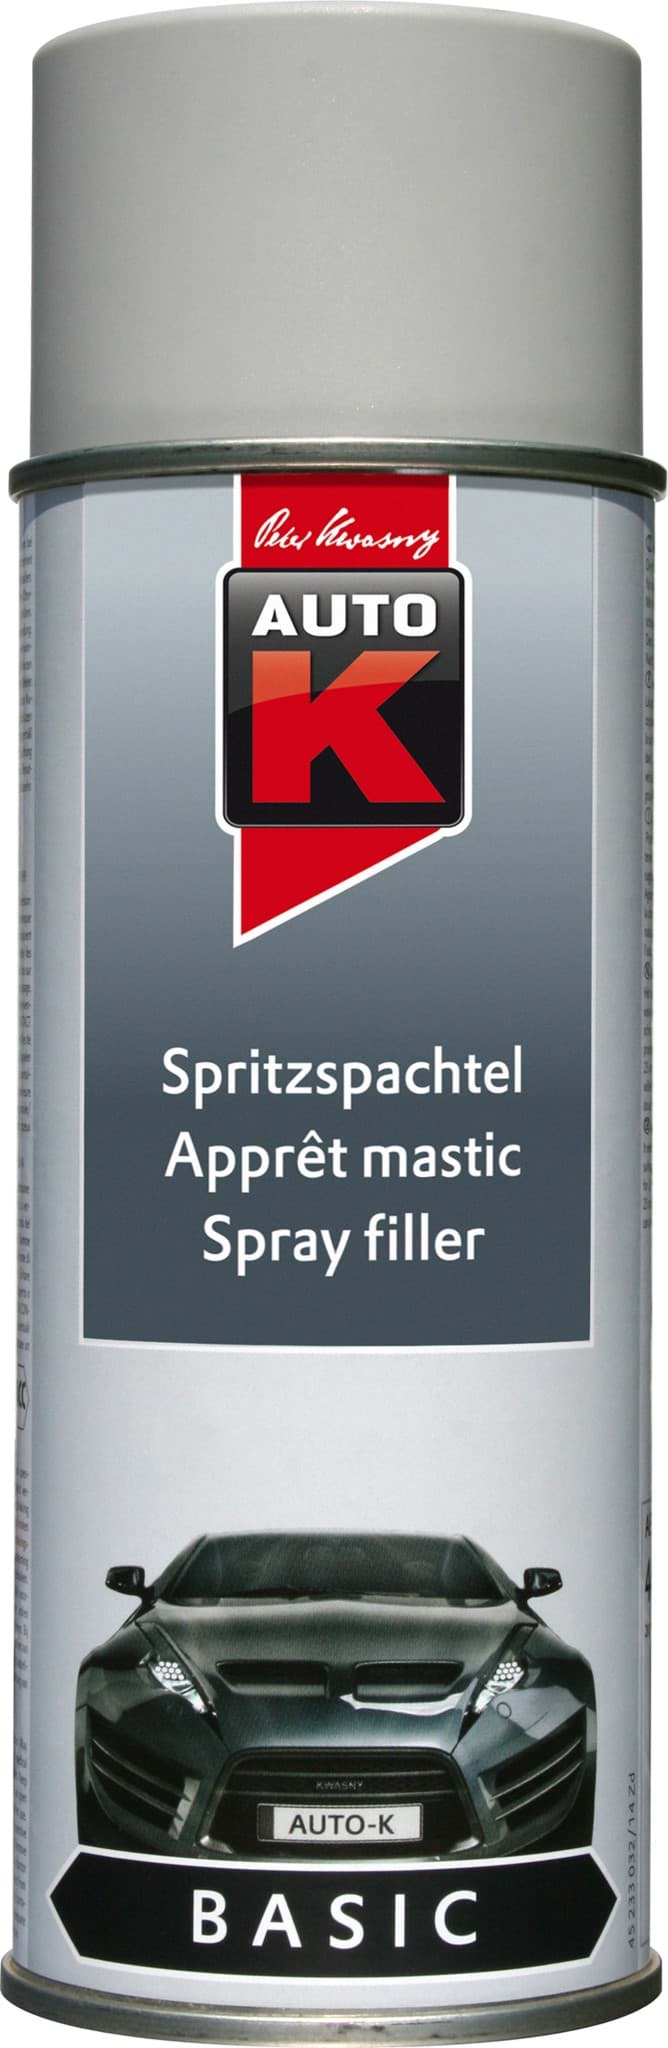 AutoK Spritzspachtel Spray 400ml 233032 resmi